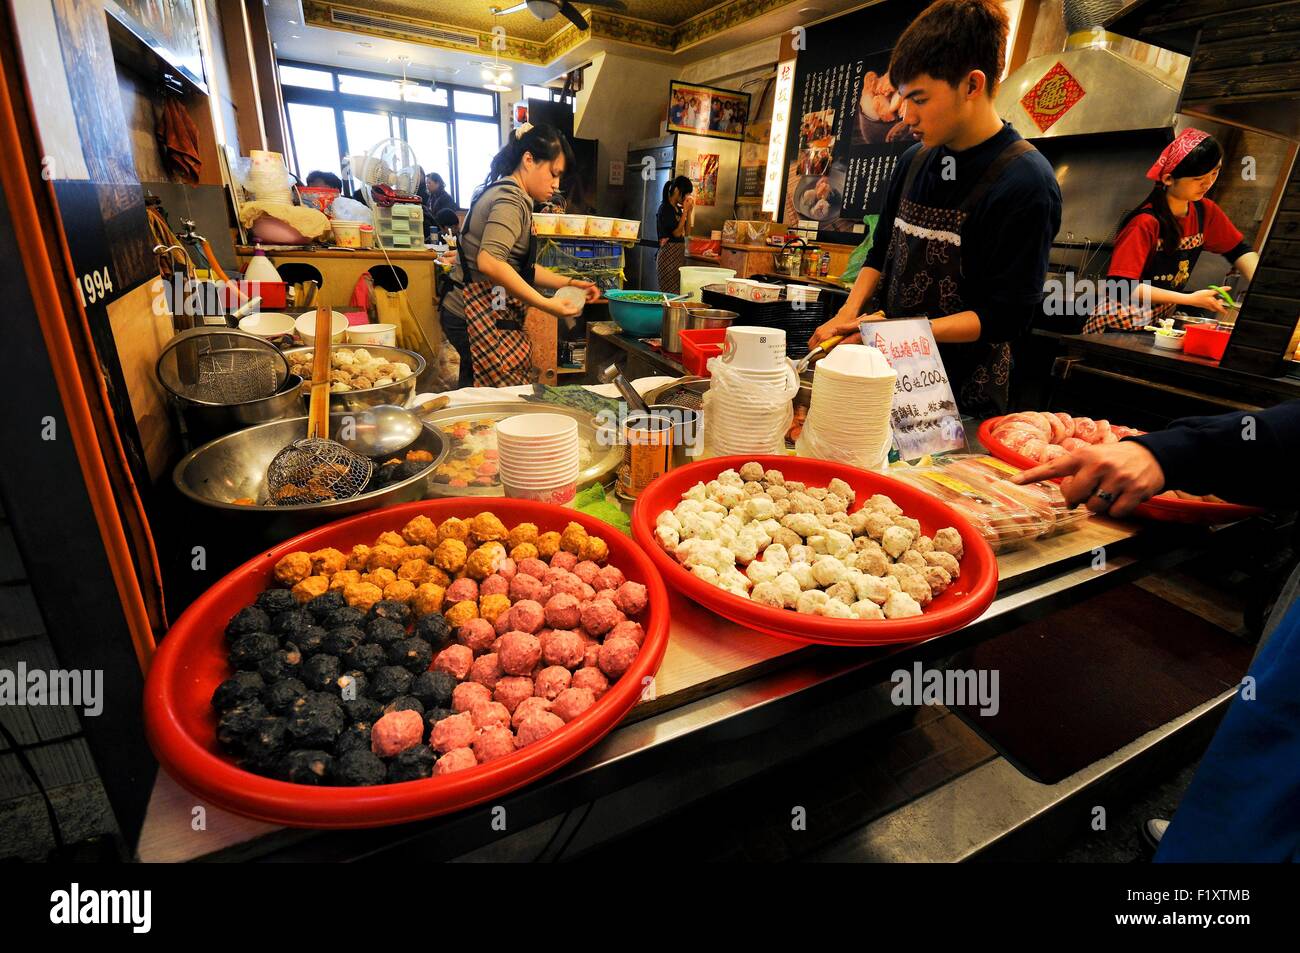 Taiwan, New Taipei City, Ruifang, Jiufen (Chiufen), food shop and restaurant in the main street Stock Photo